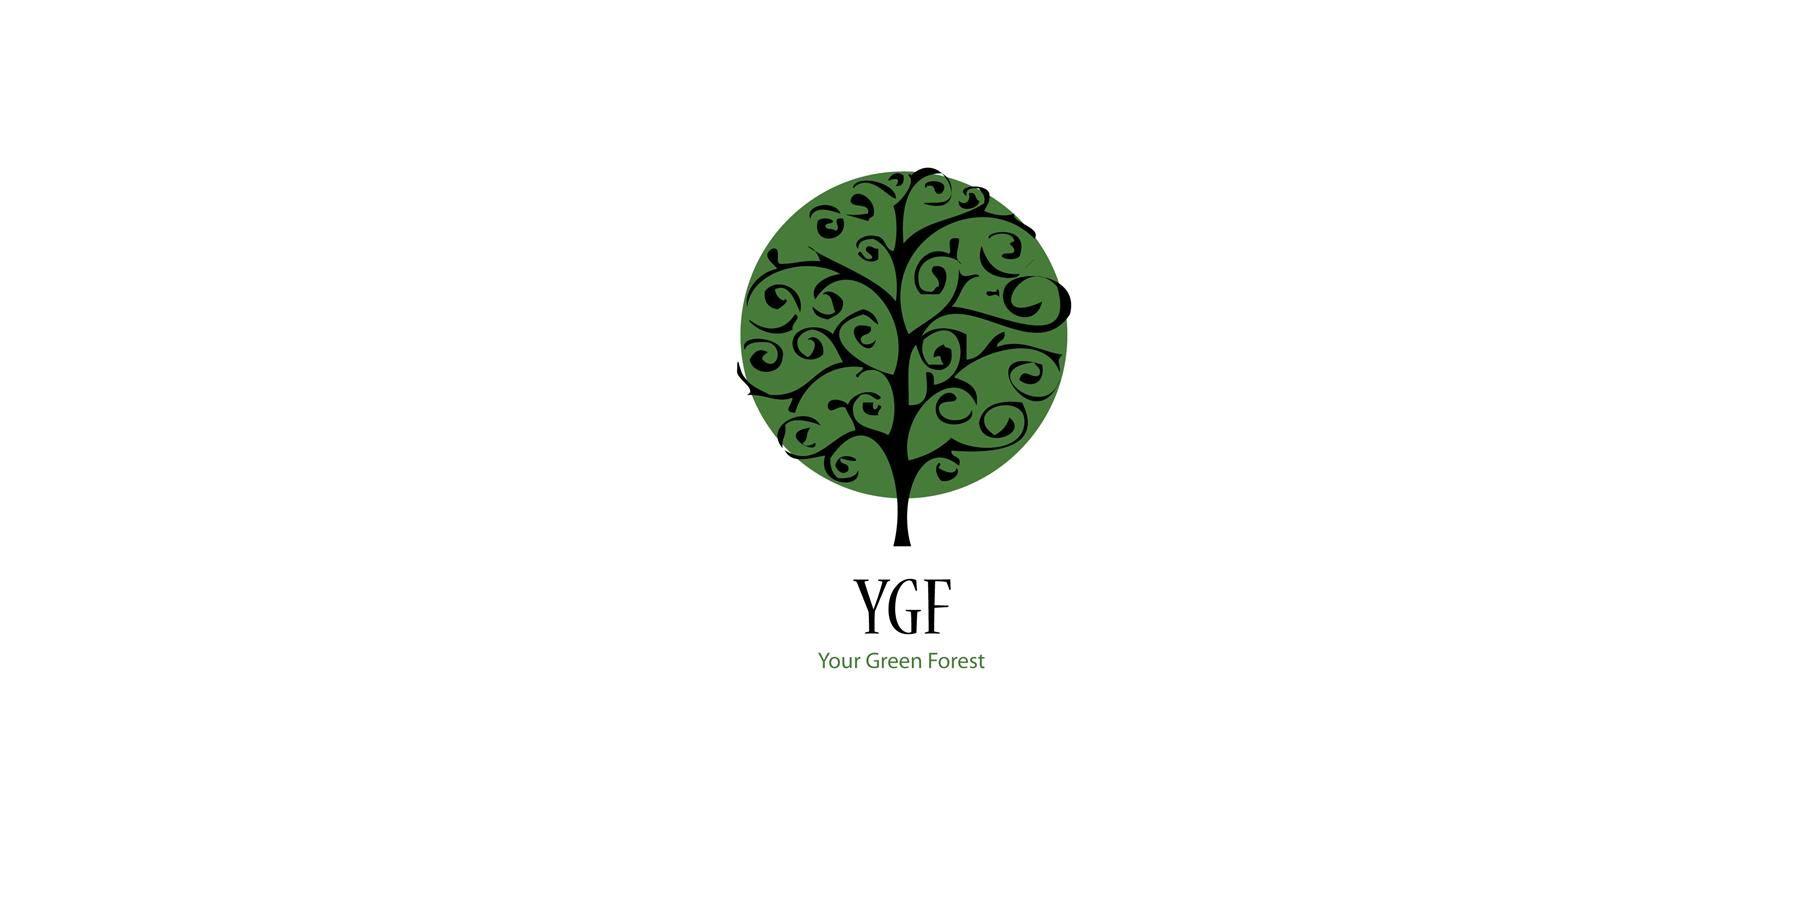 Green Organization Logo - 11 Green Logo Design Images - Companies with Green Logos, Green Logo ...